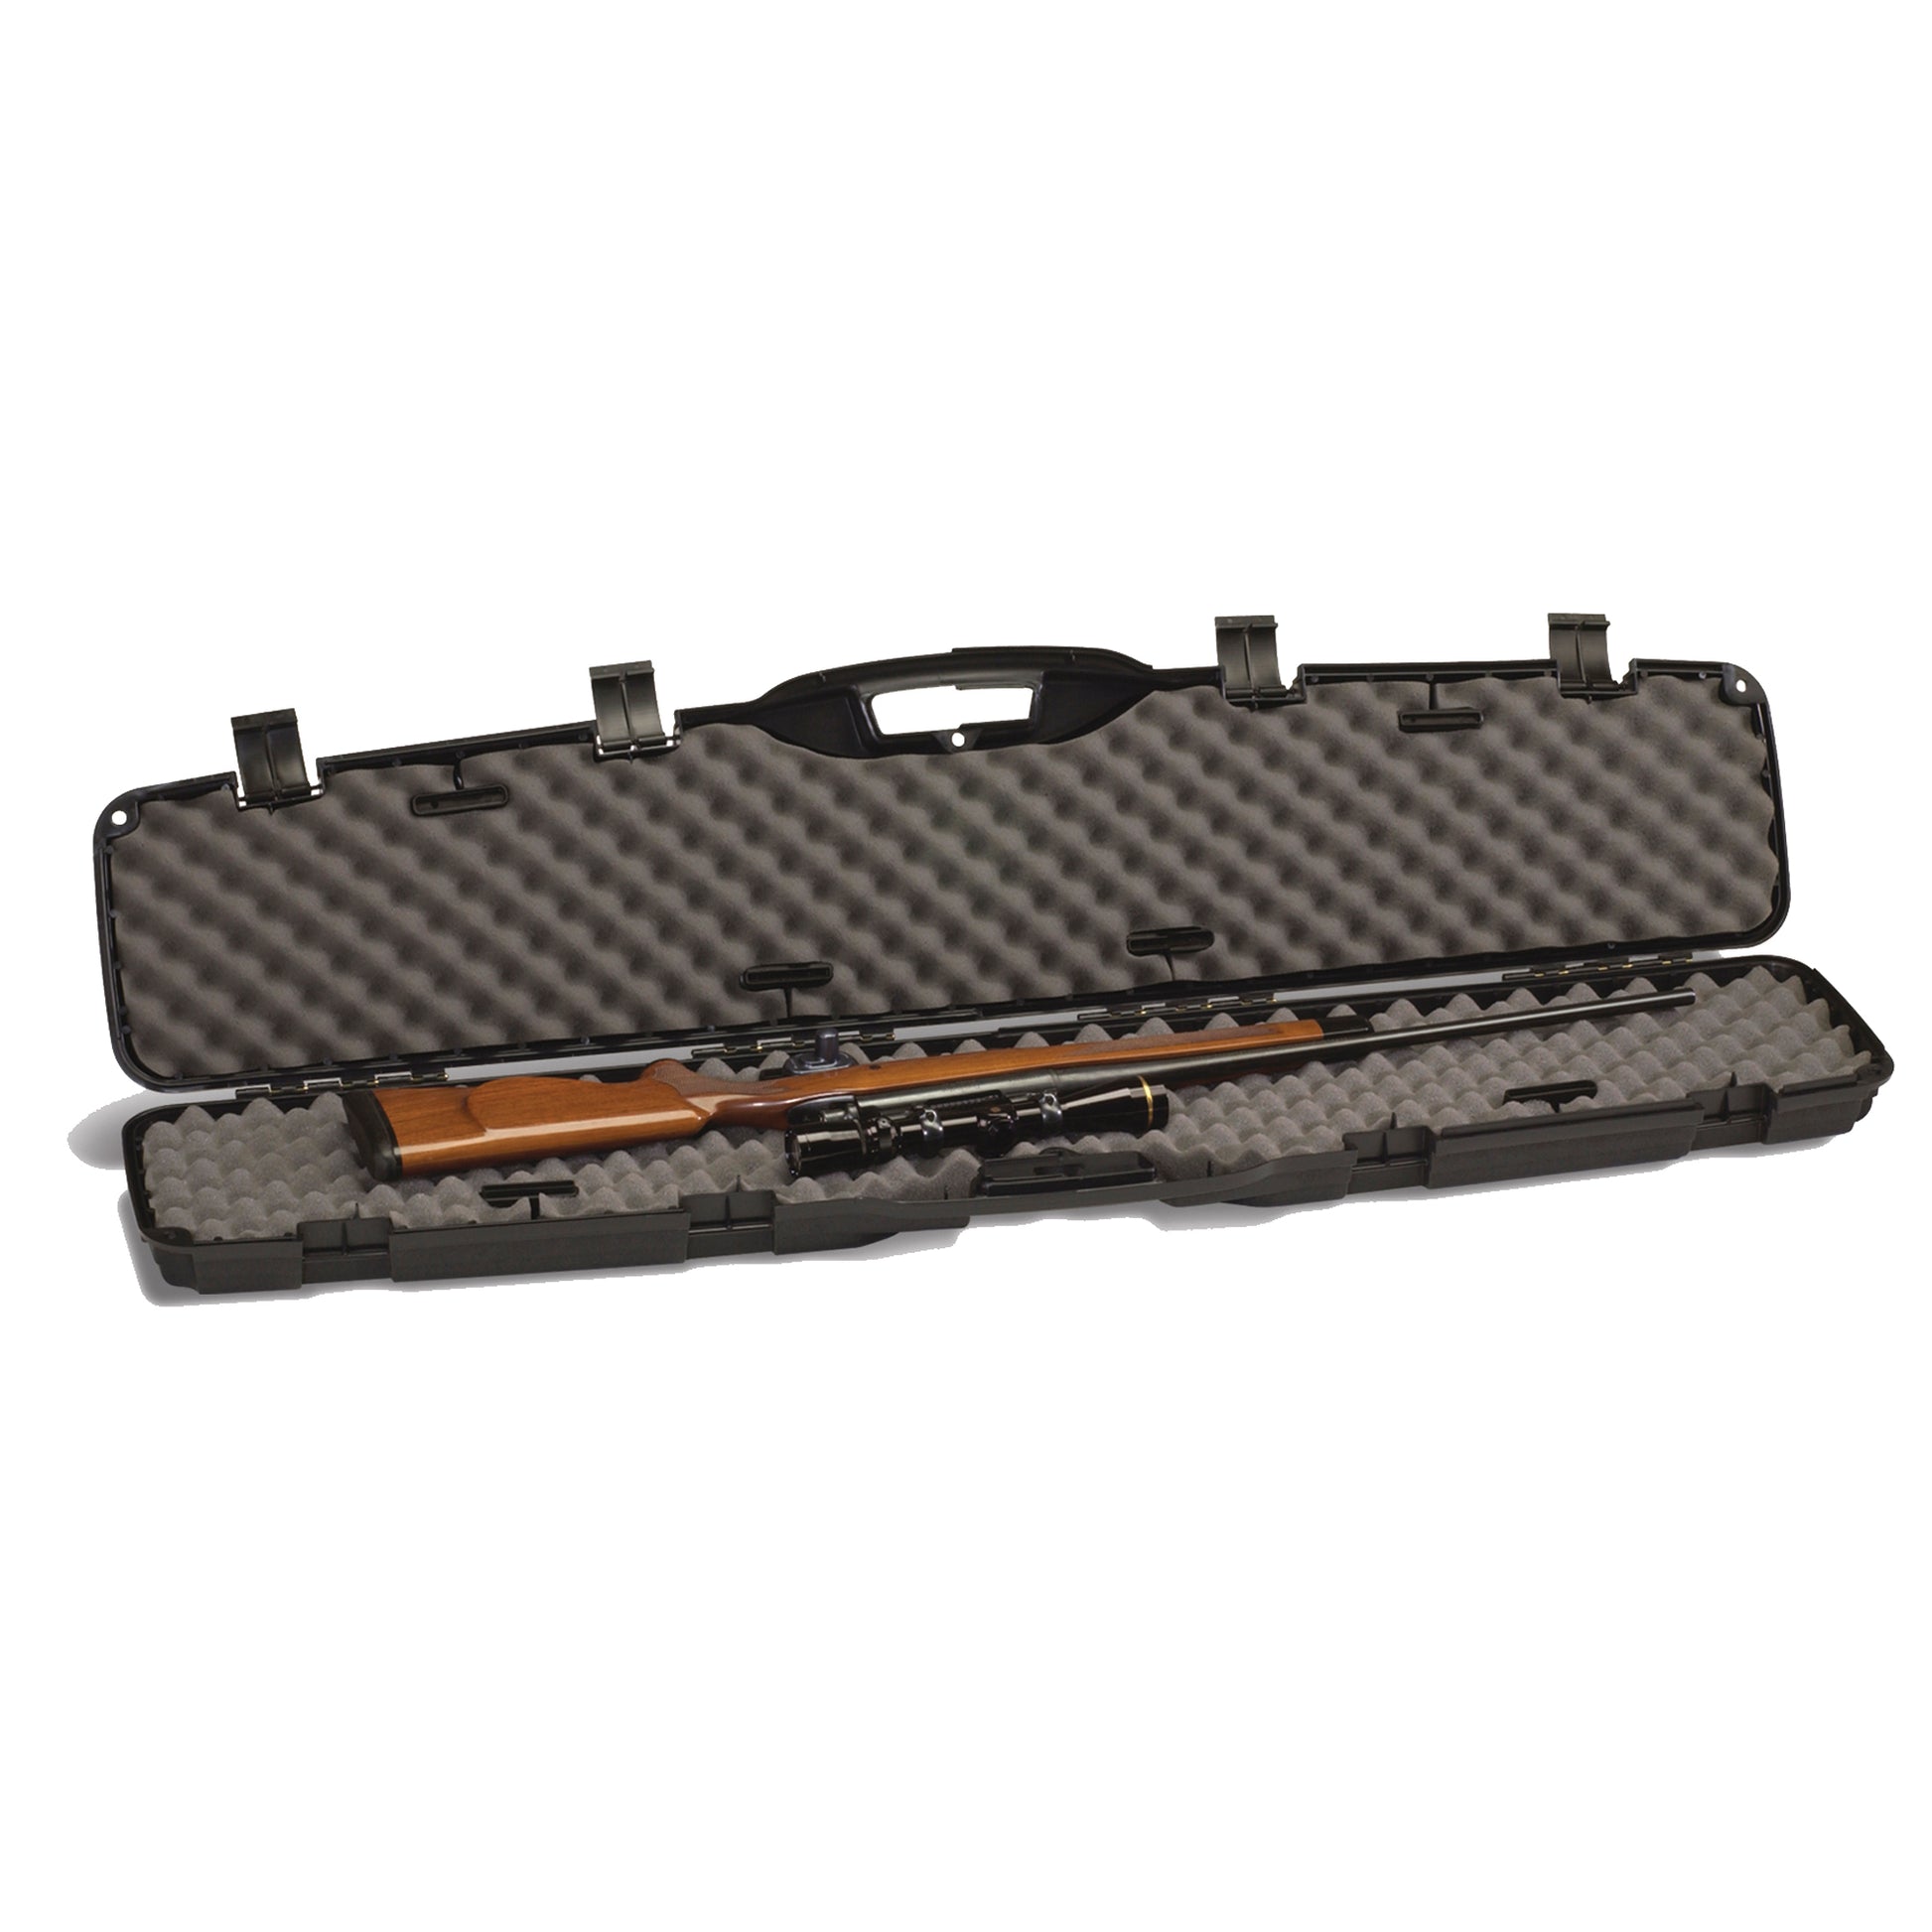 Plano Pro Max Single Rifle Case secure transport 51.50x15X4 Black 153101 - California Shooting Supplies